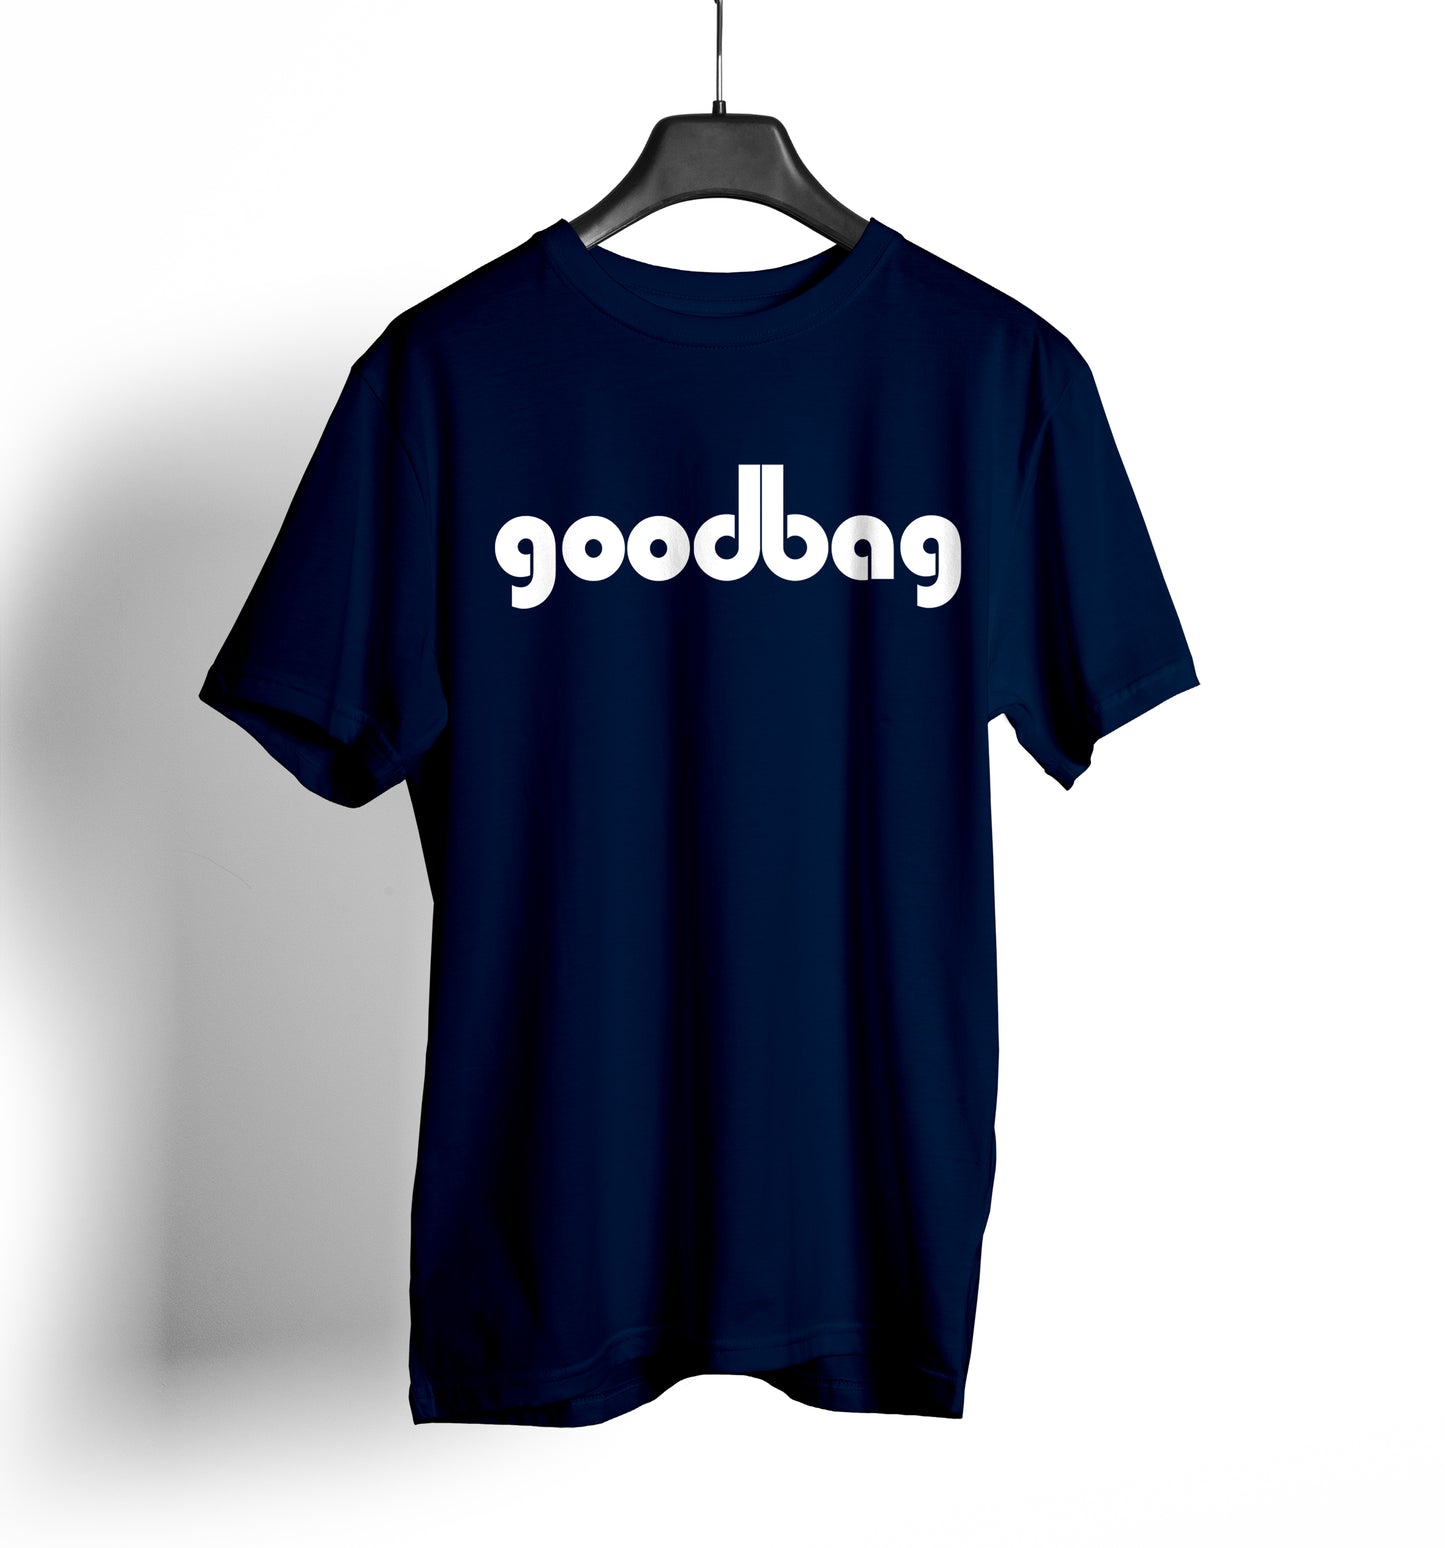 cornhole shirt goodbag blue navy